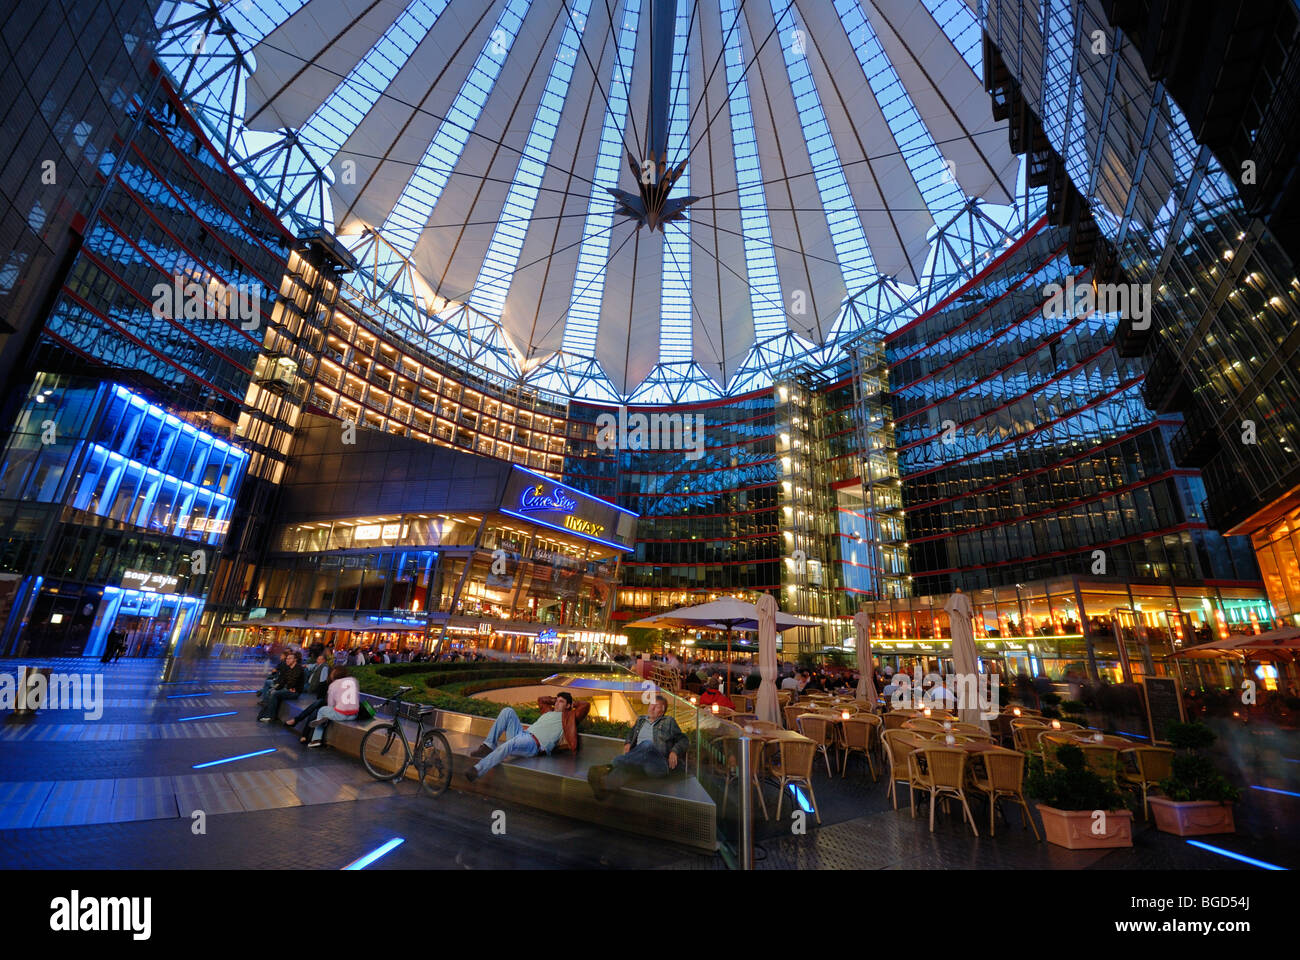 Under the roof of Sony Center, Potsdamer Platz, nightlife, restaurants, people, summer evening, Berlin, Germany. Stock Photo